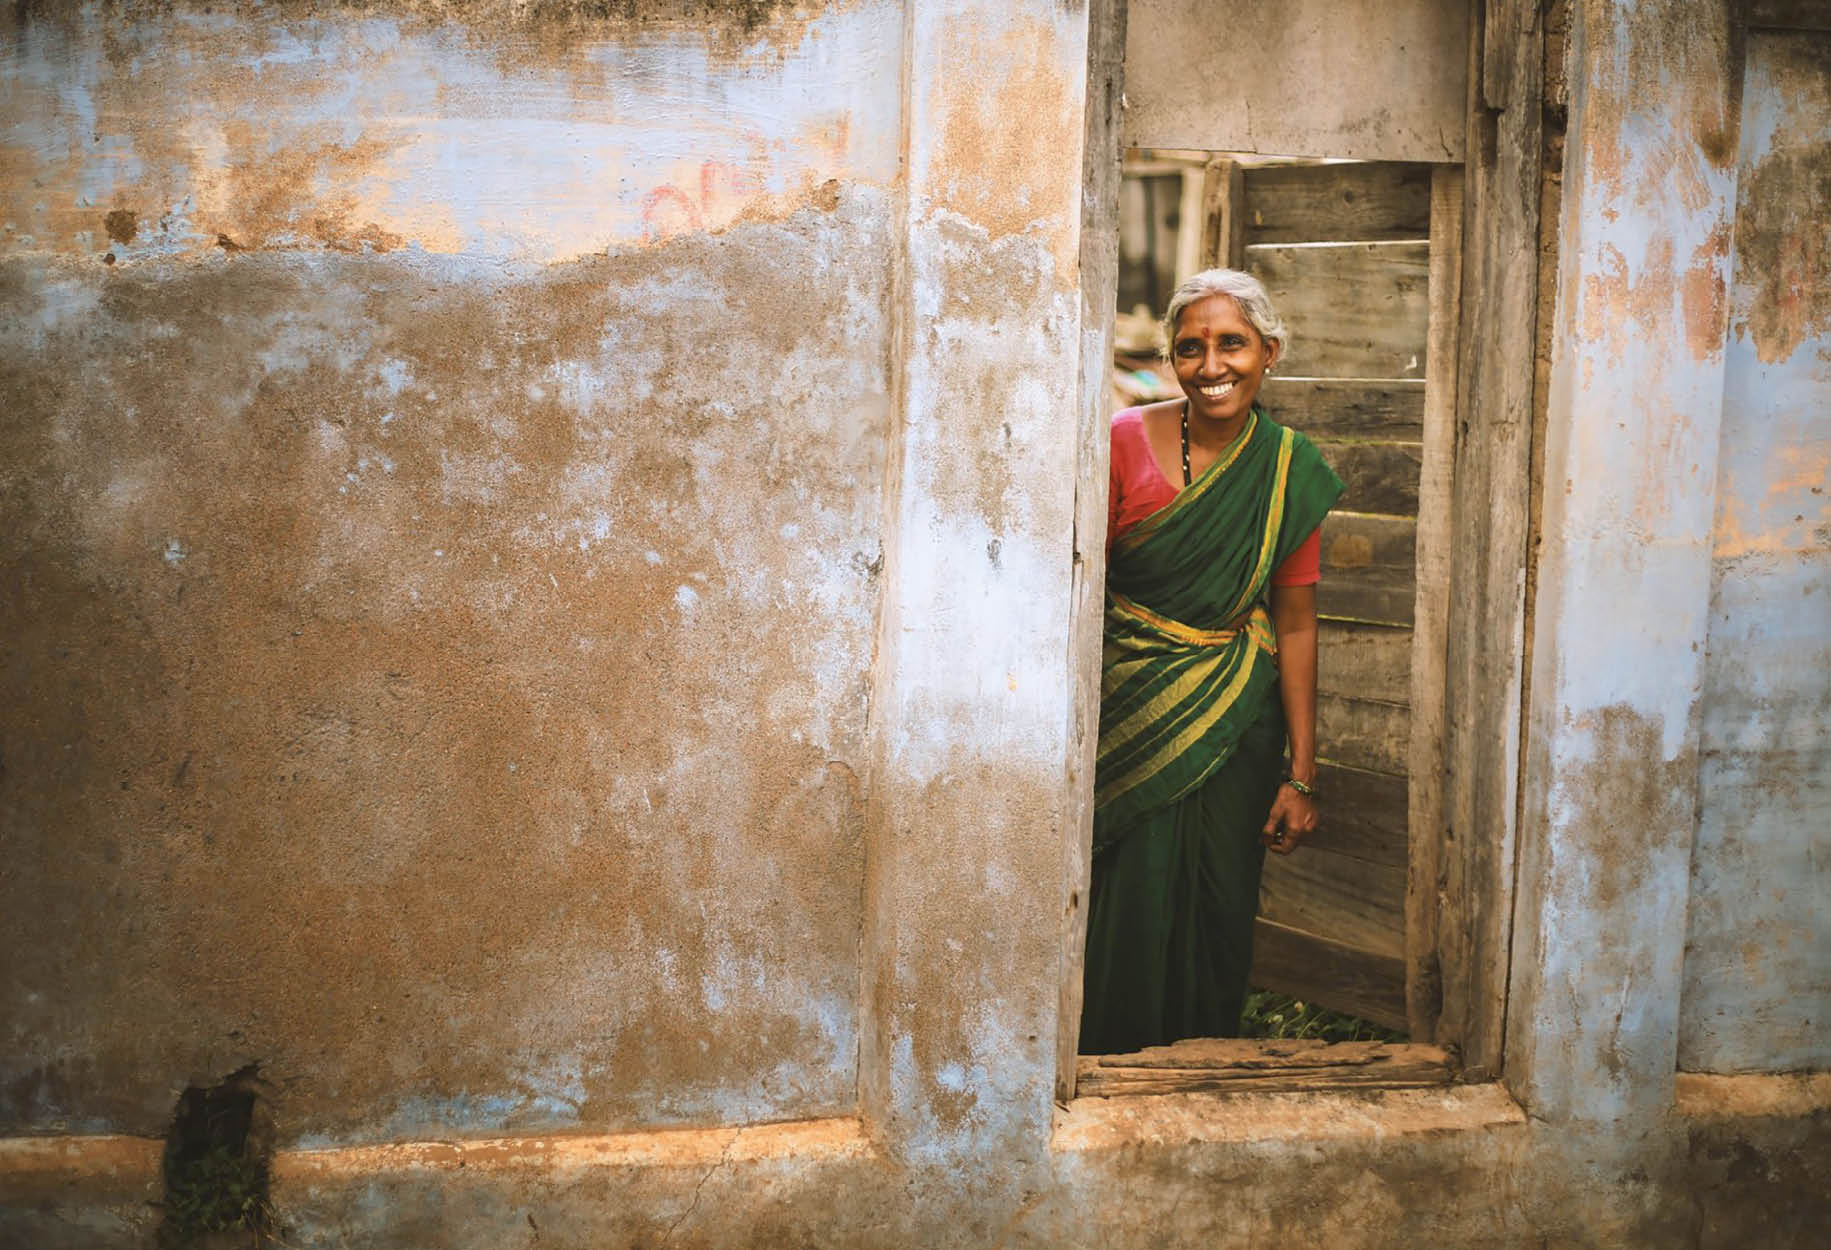 Elder Abuse in India: Emerging Evidences